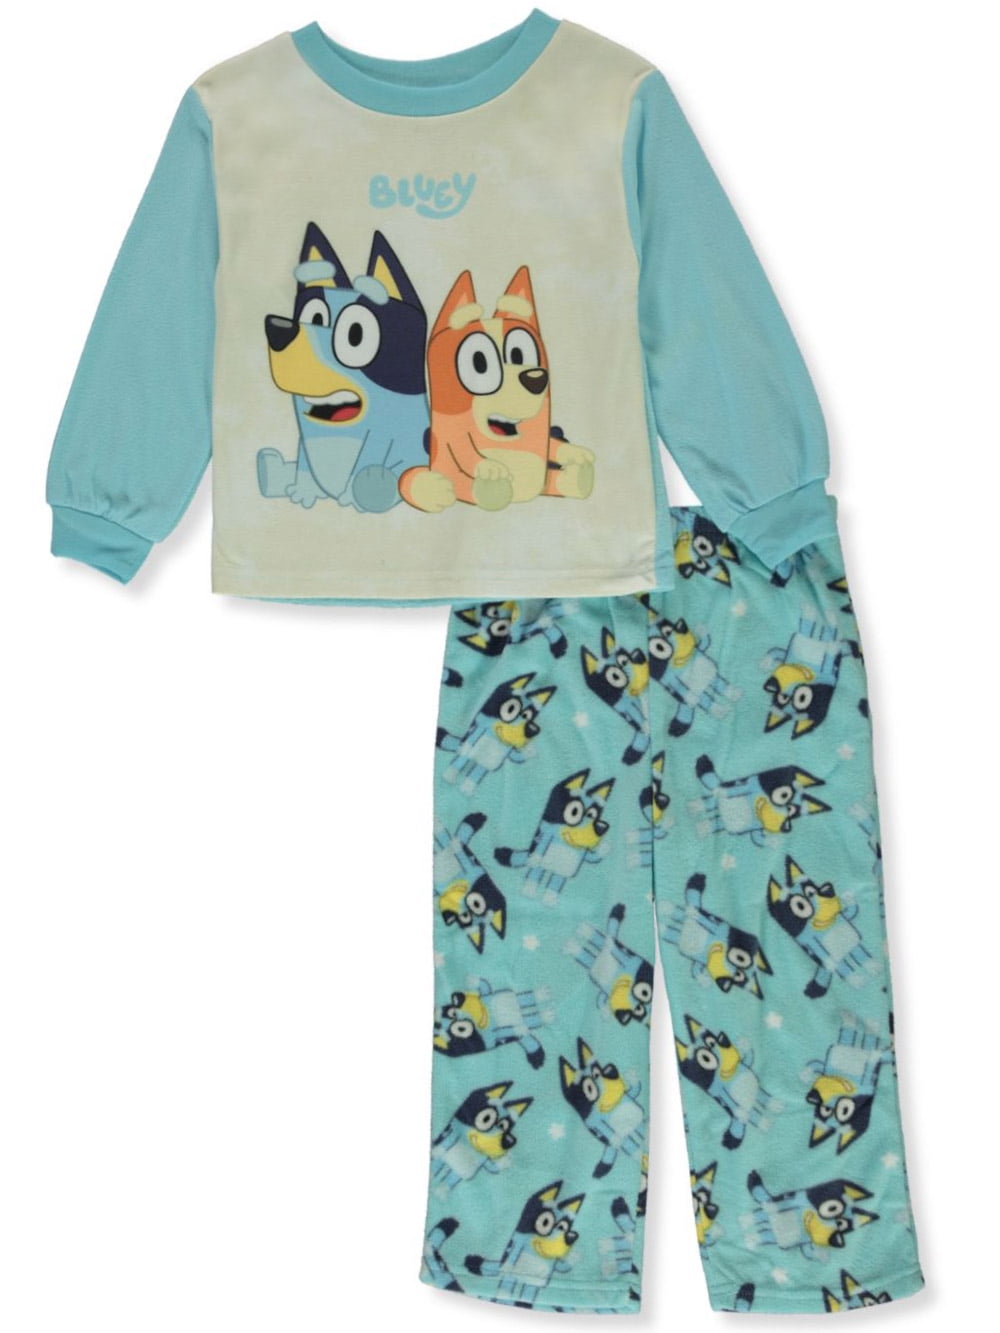 BLUEY Boy's Pyjamas /BLUEY & BINGO Blue Long-Sleeved PJs Sizes 18